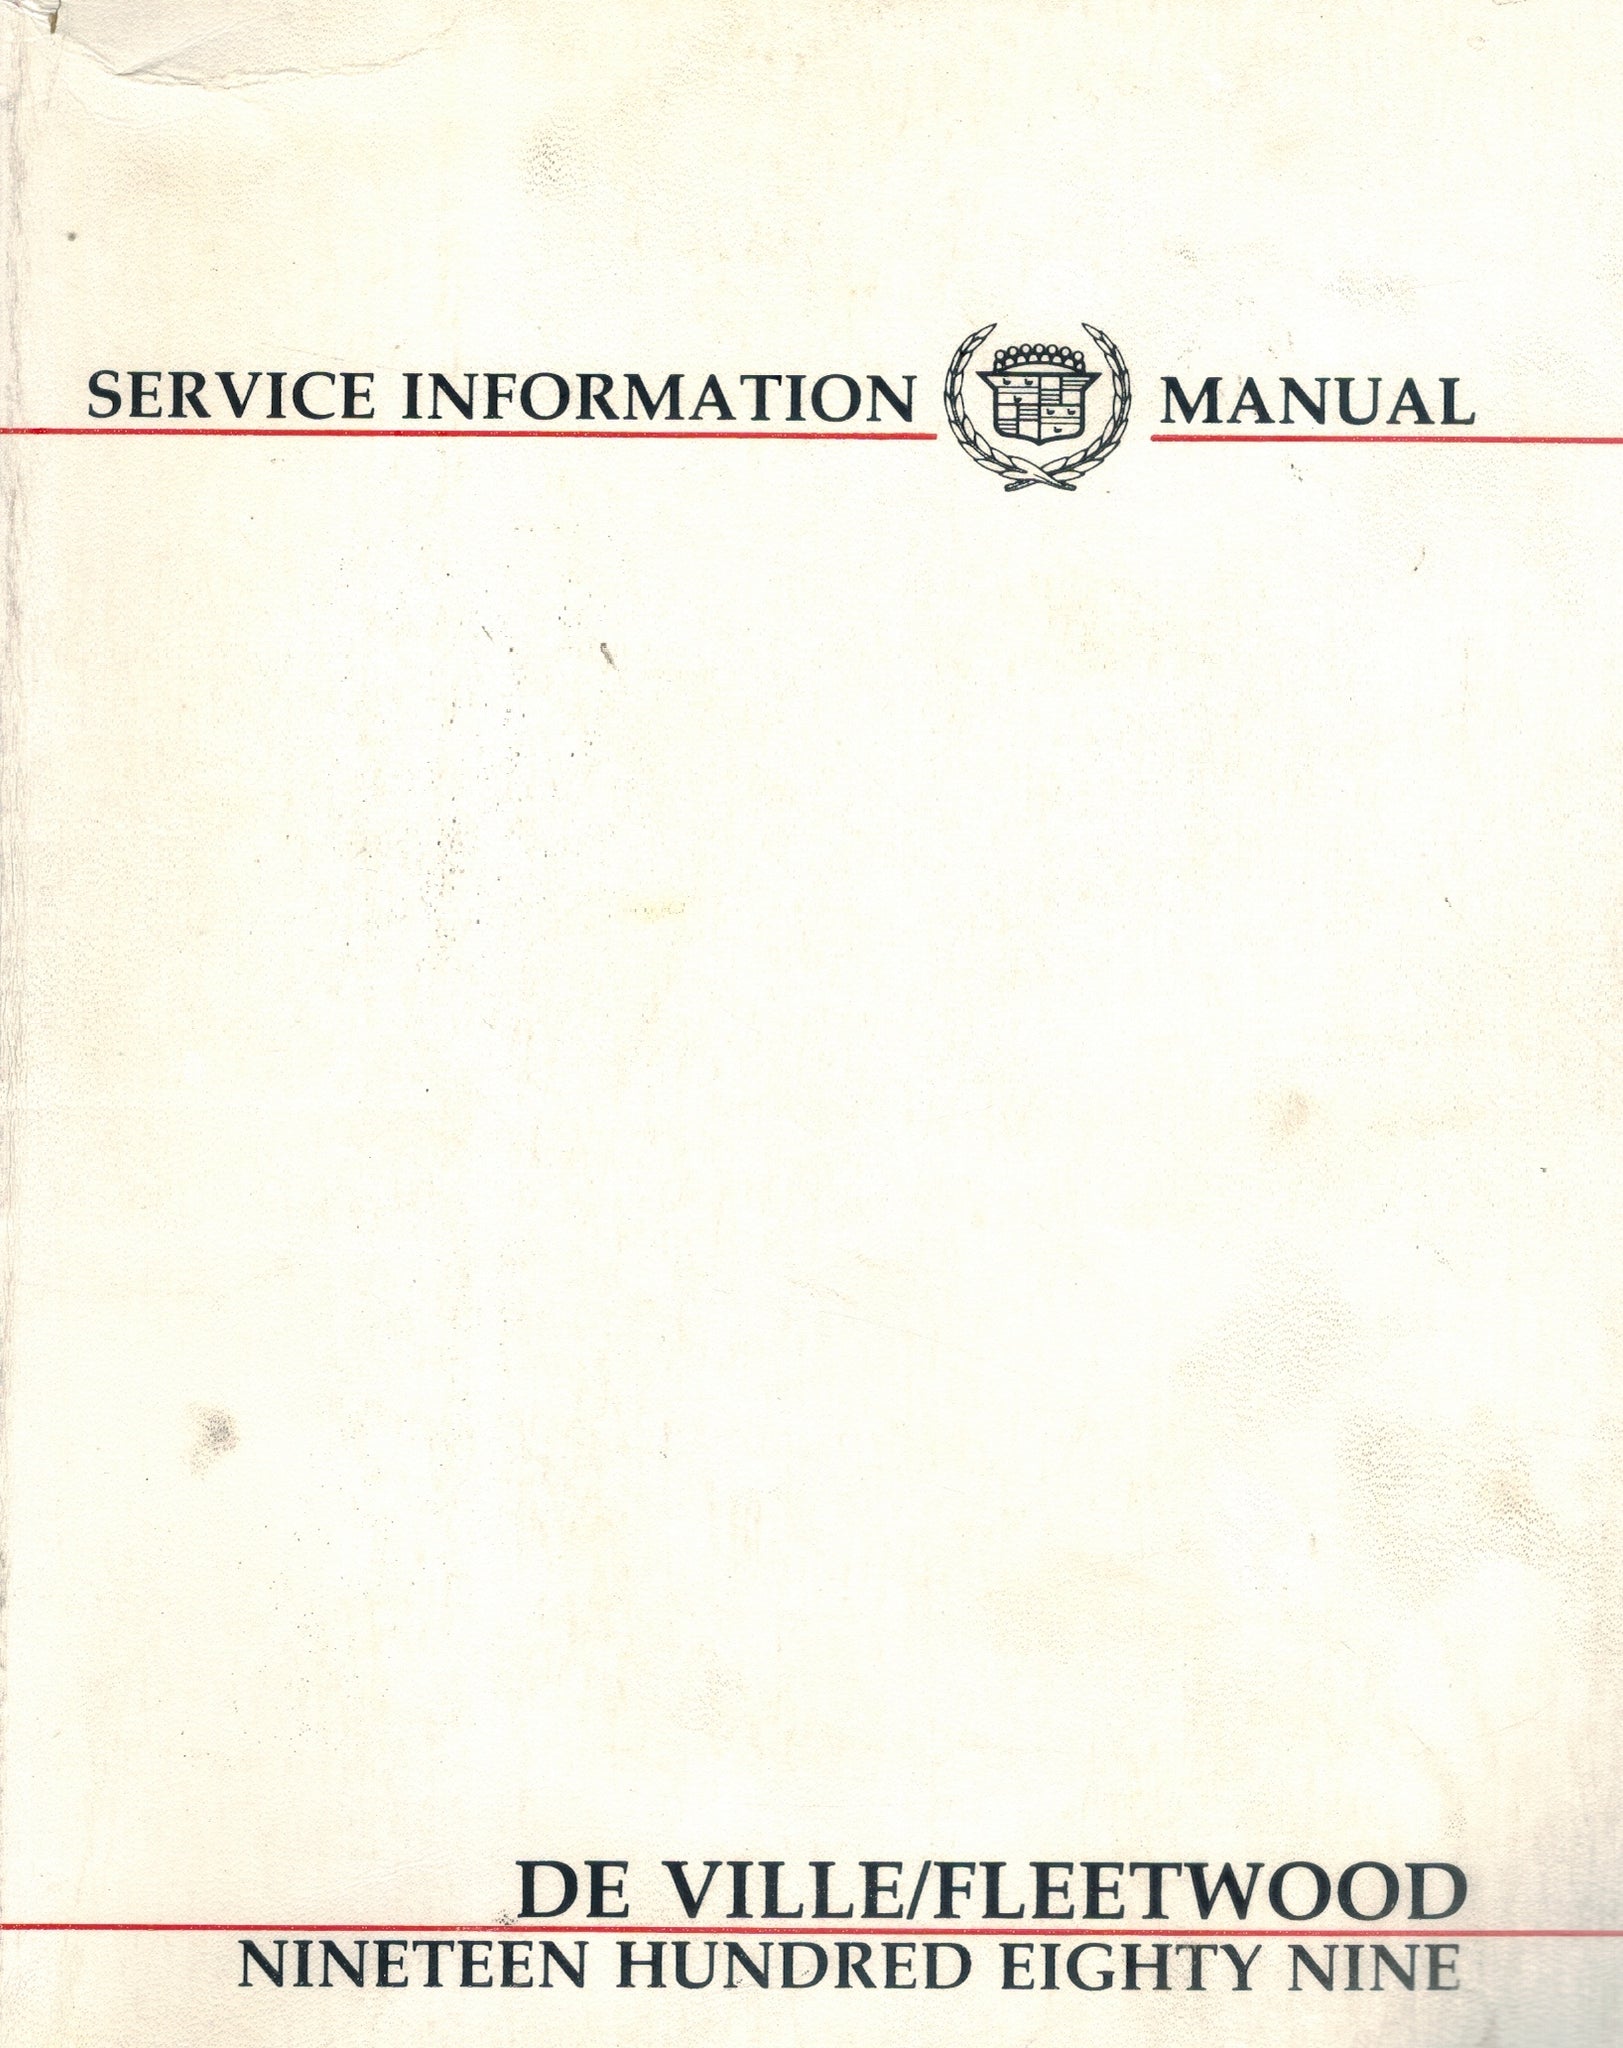 SERVICE INFORMATION MANUAL DE VILLE/FLEETWOOD 1989